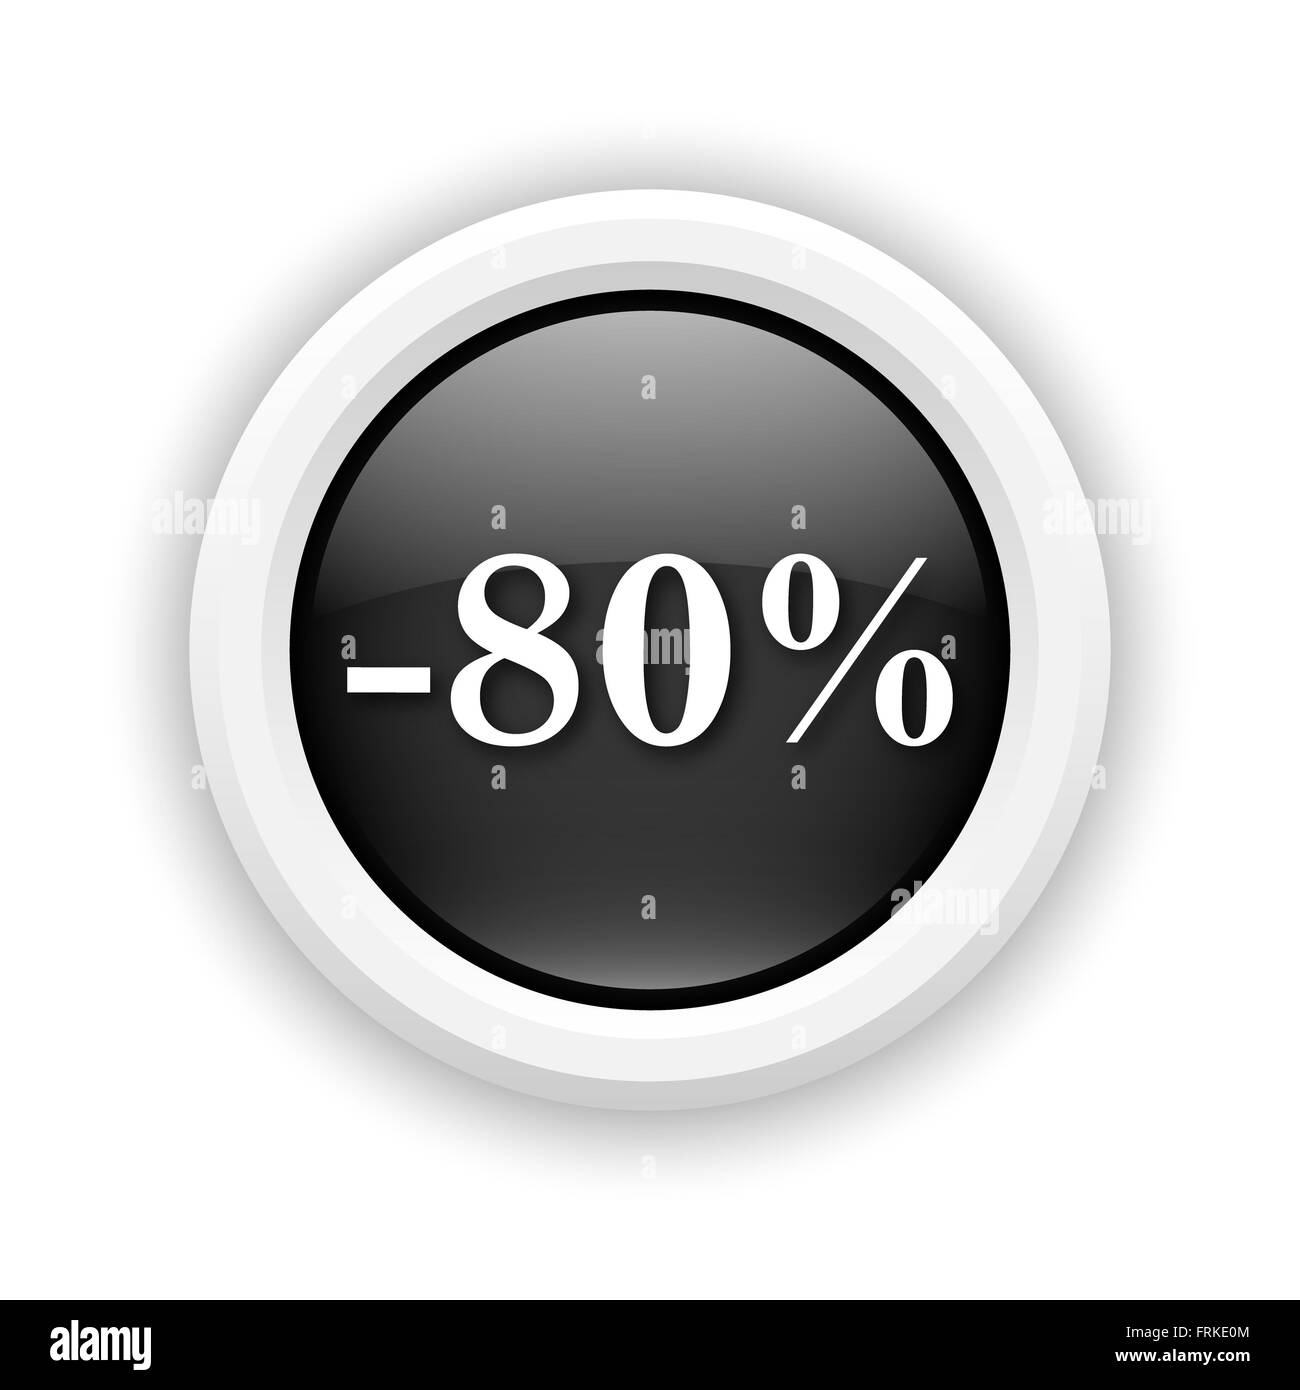 Round plastic icon with white design on black background Stock Photo